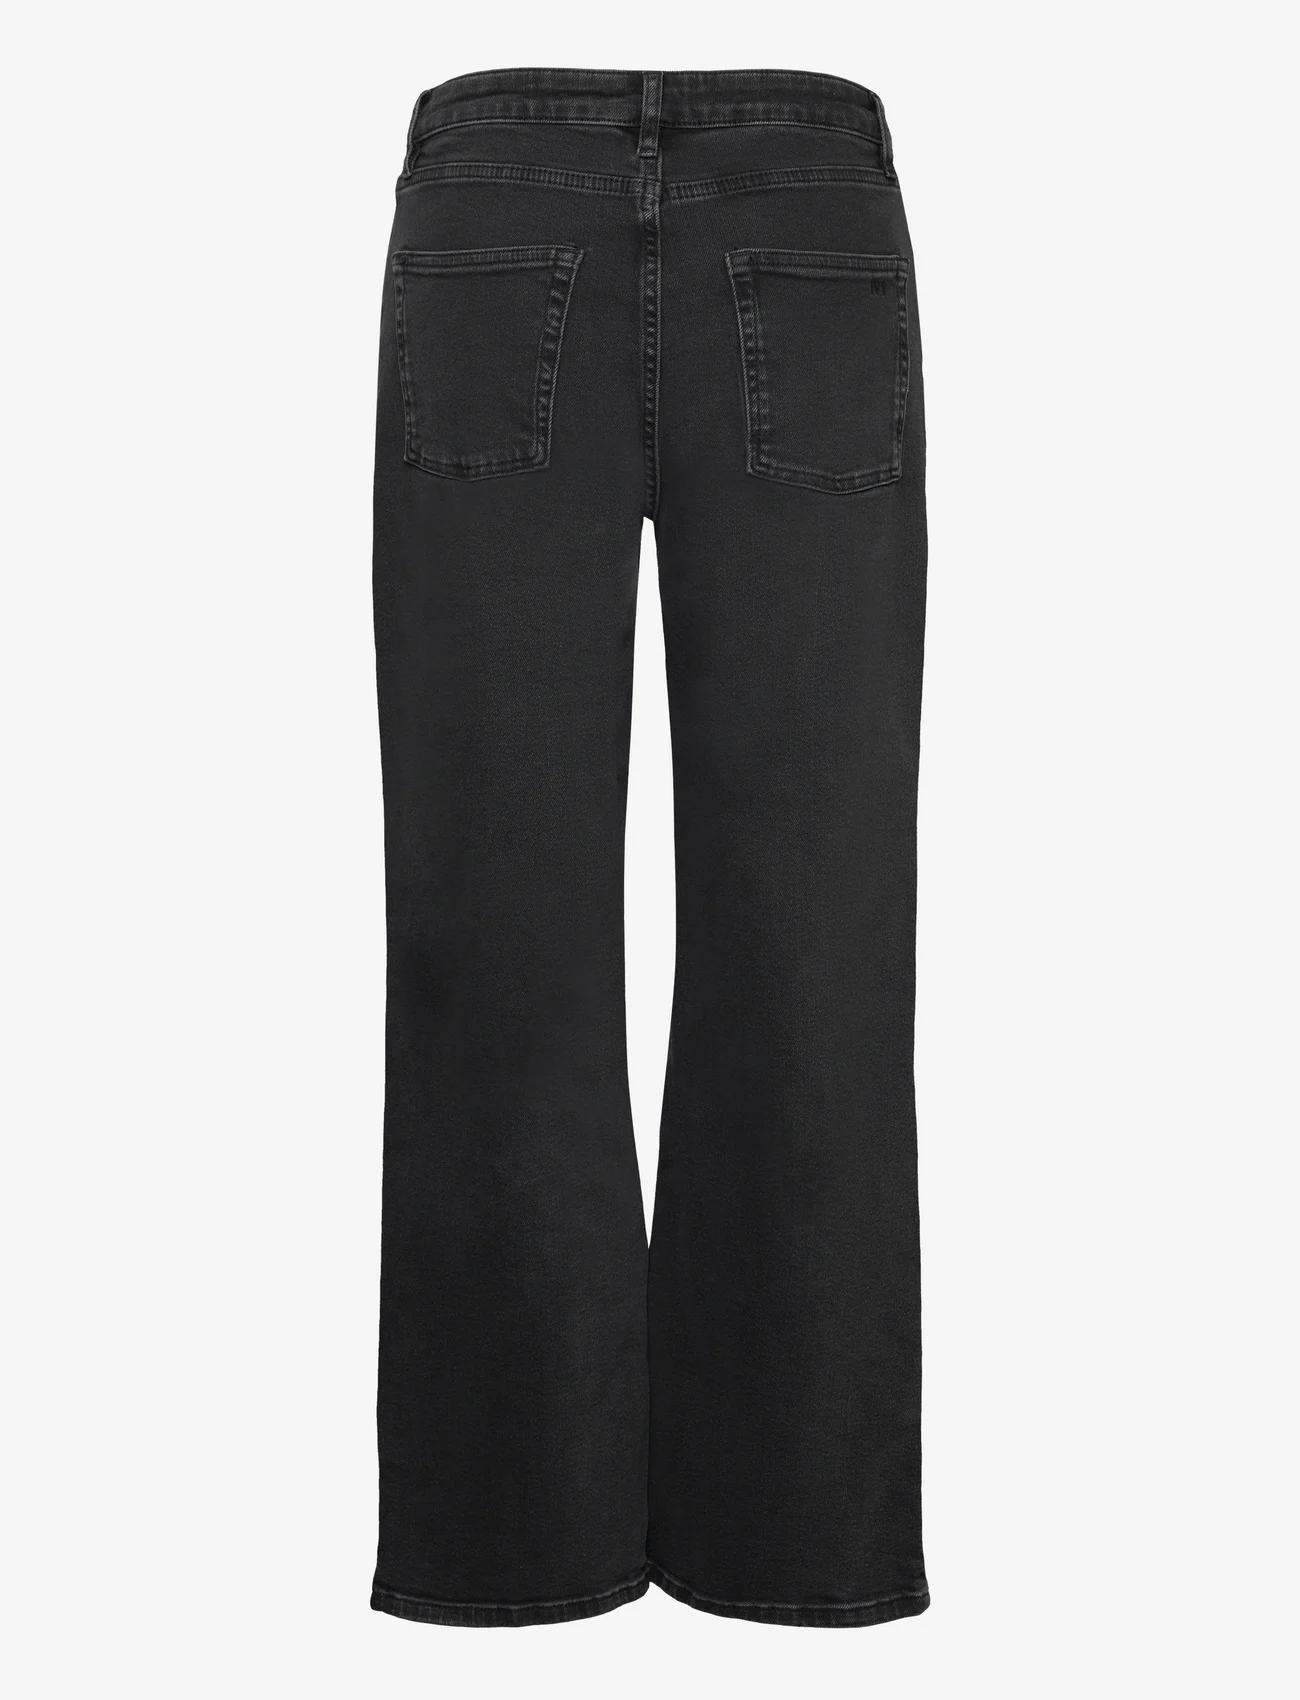 IVY Copenhagen - IVY-Brooke Jeans Wash Original Blac - vida jeans - black - 1